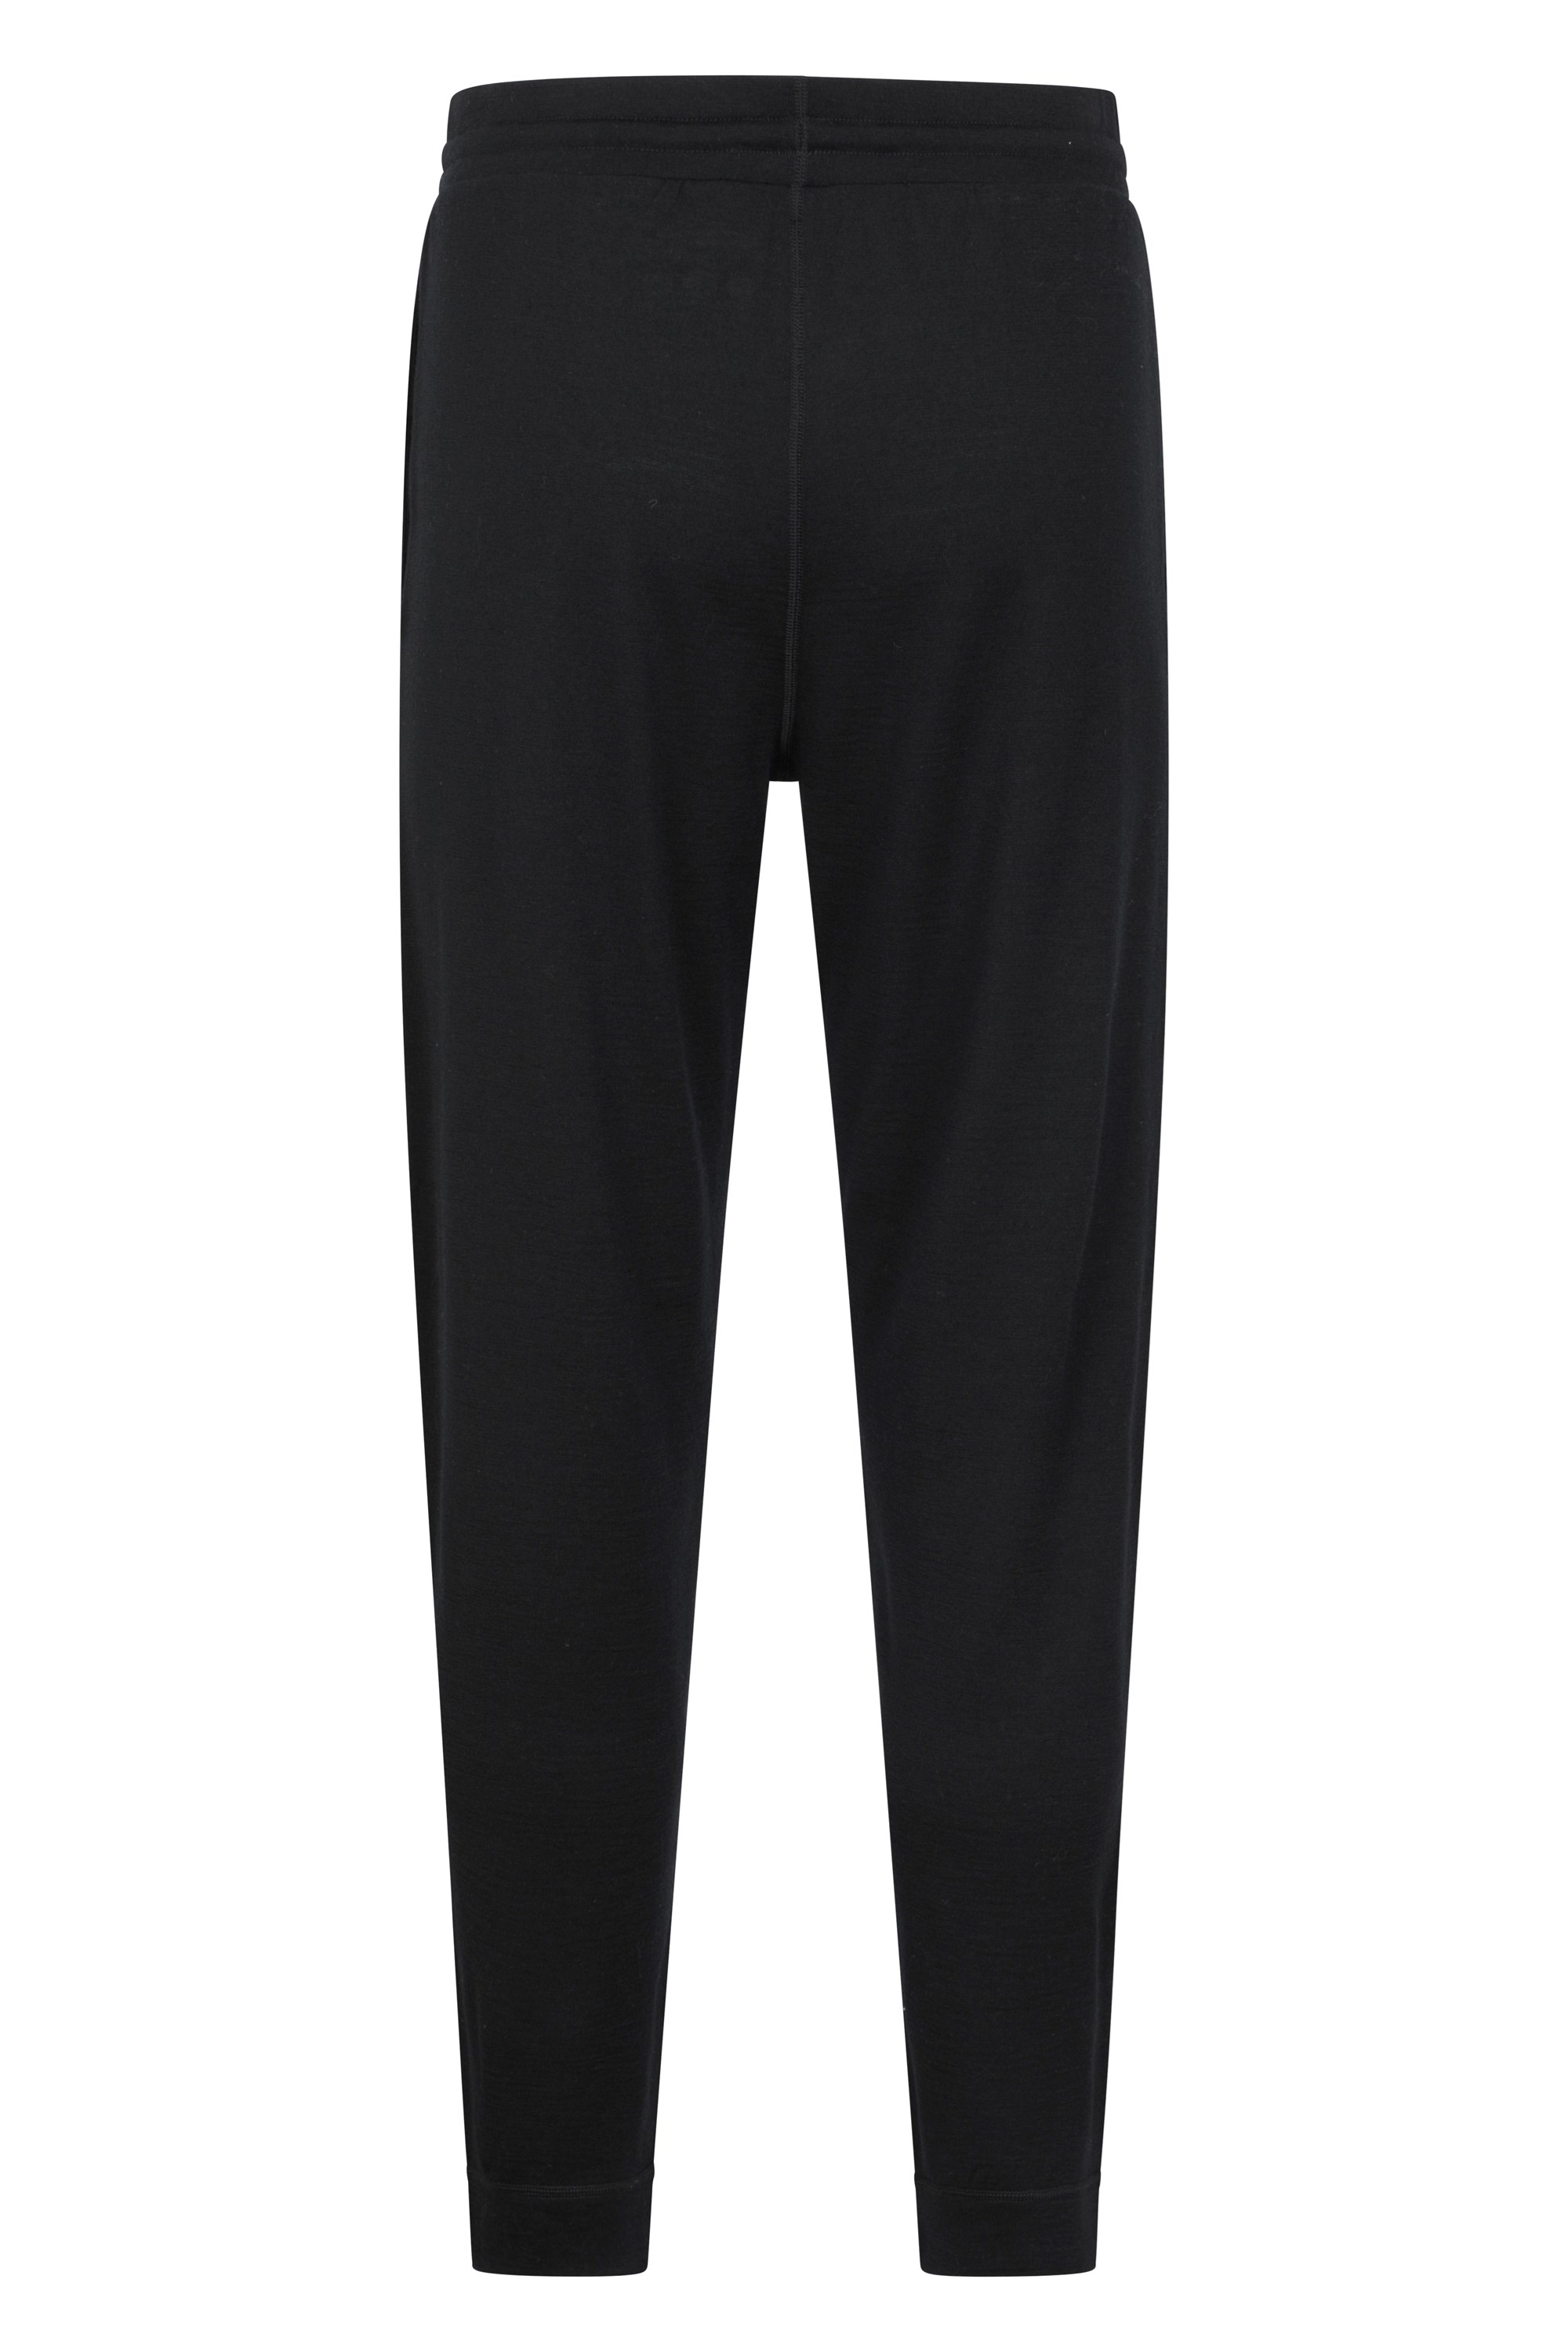 Buy Mountain Warehouse Black Merino Thermal Pants Multipack from